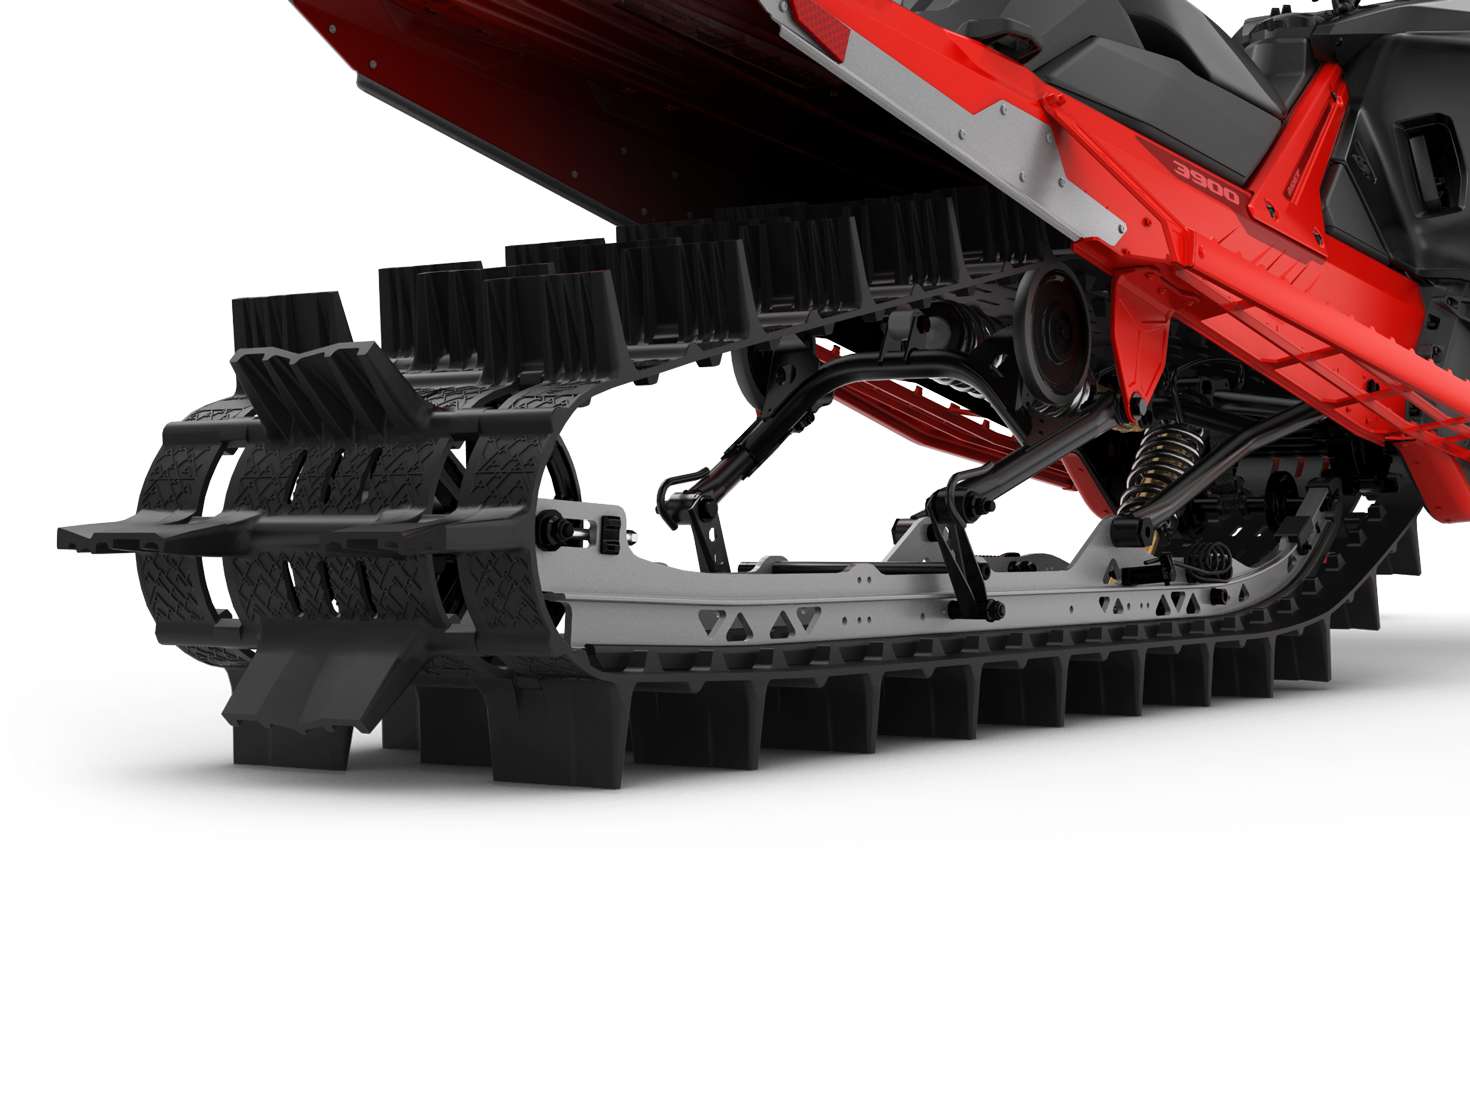 Lynx Shredder DS rear view